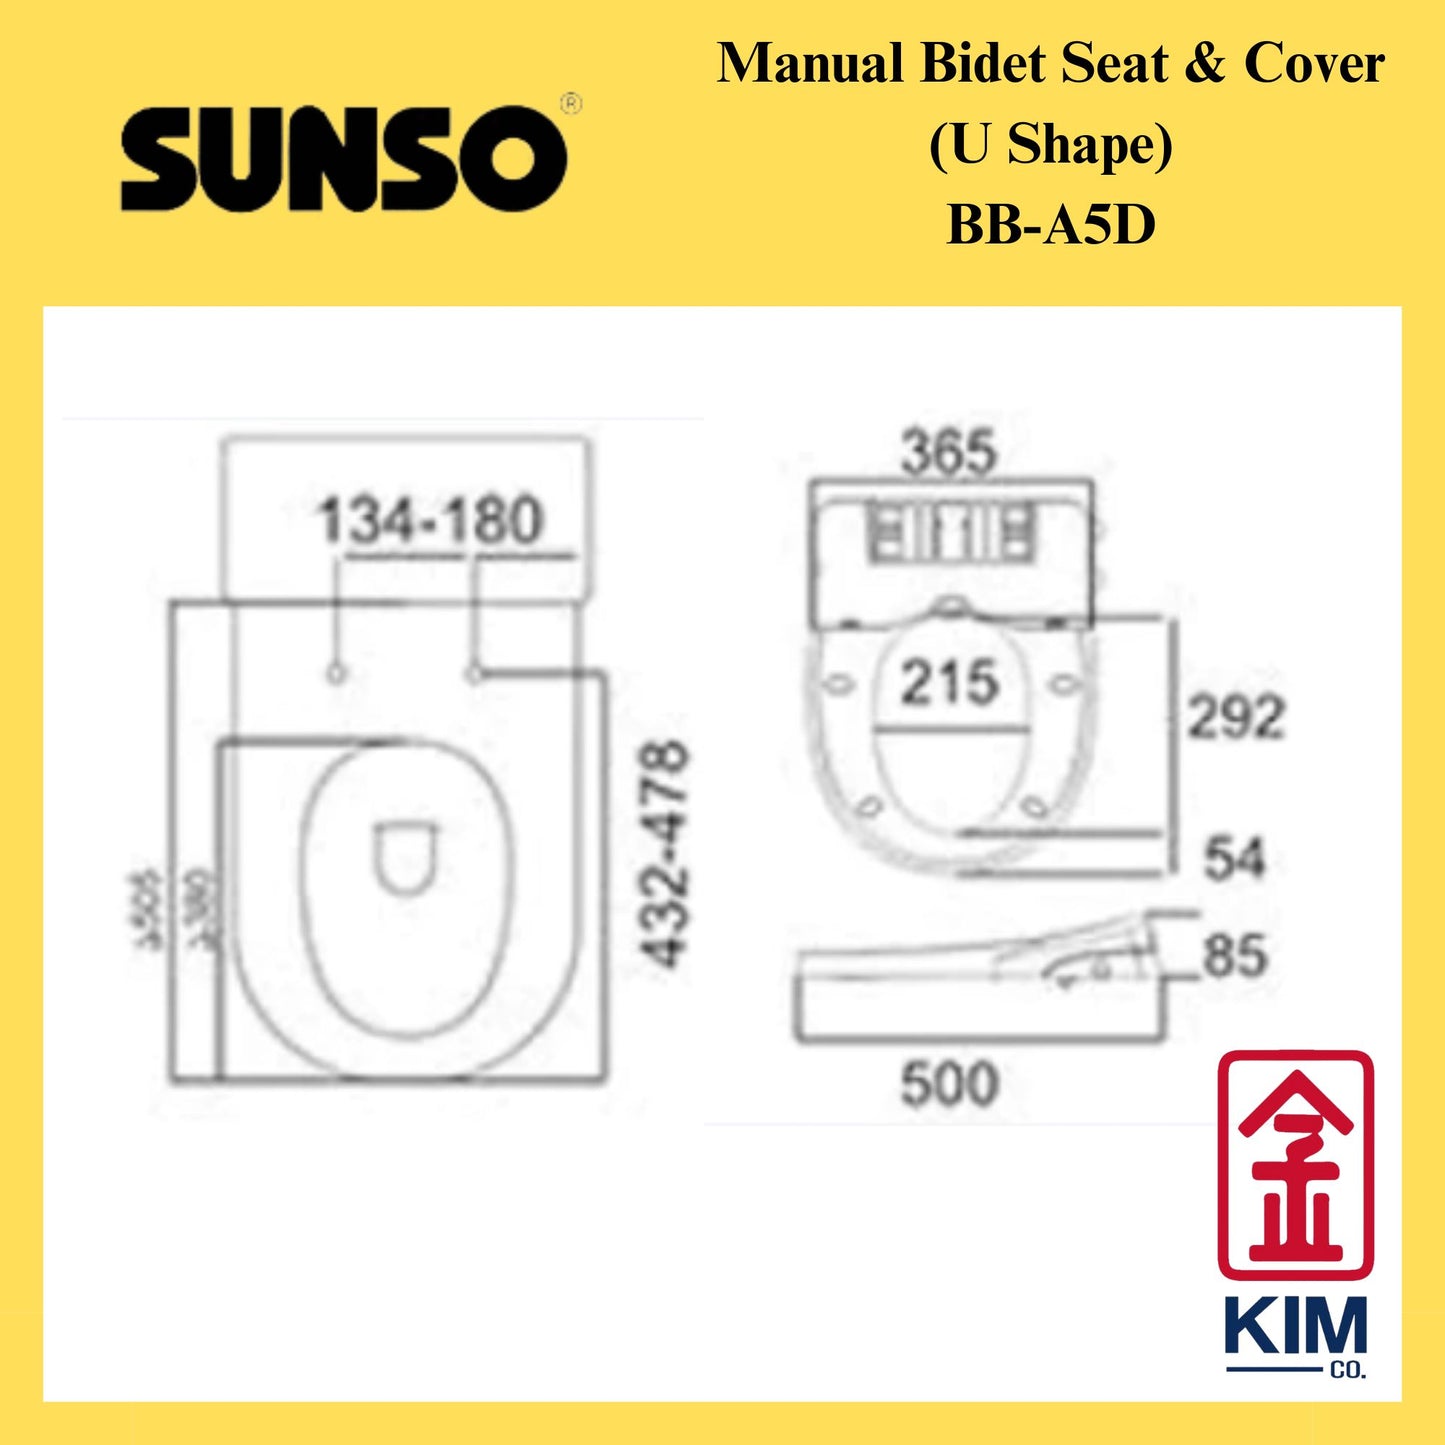 Sunso Manual Bidet Seat & Cover D Shape (BB-A5D)